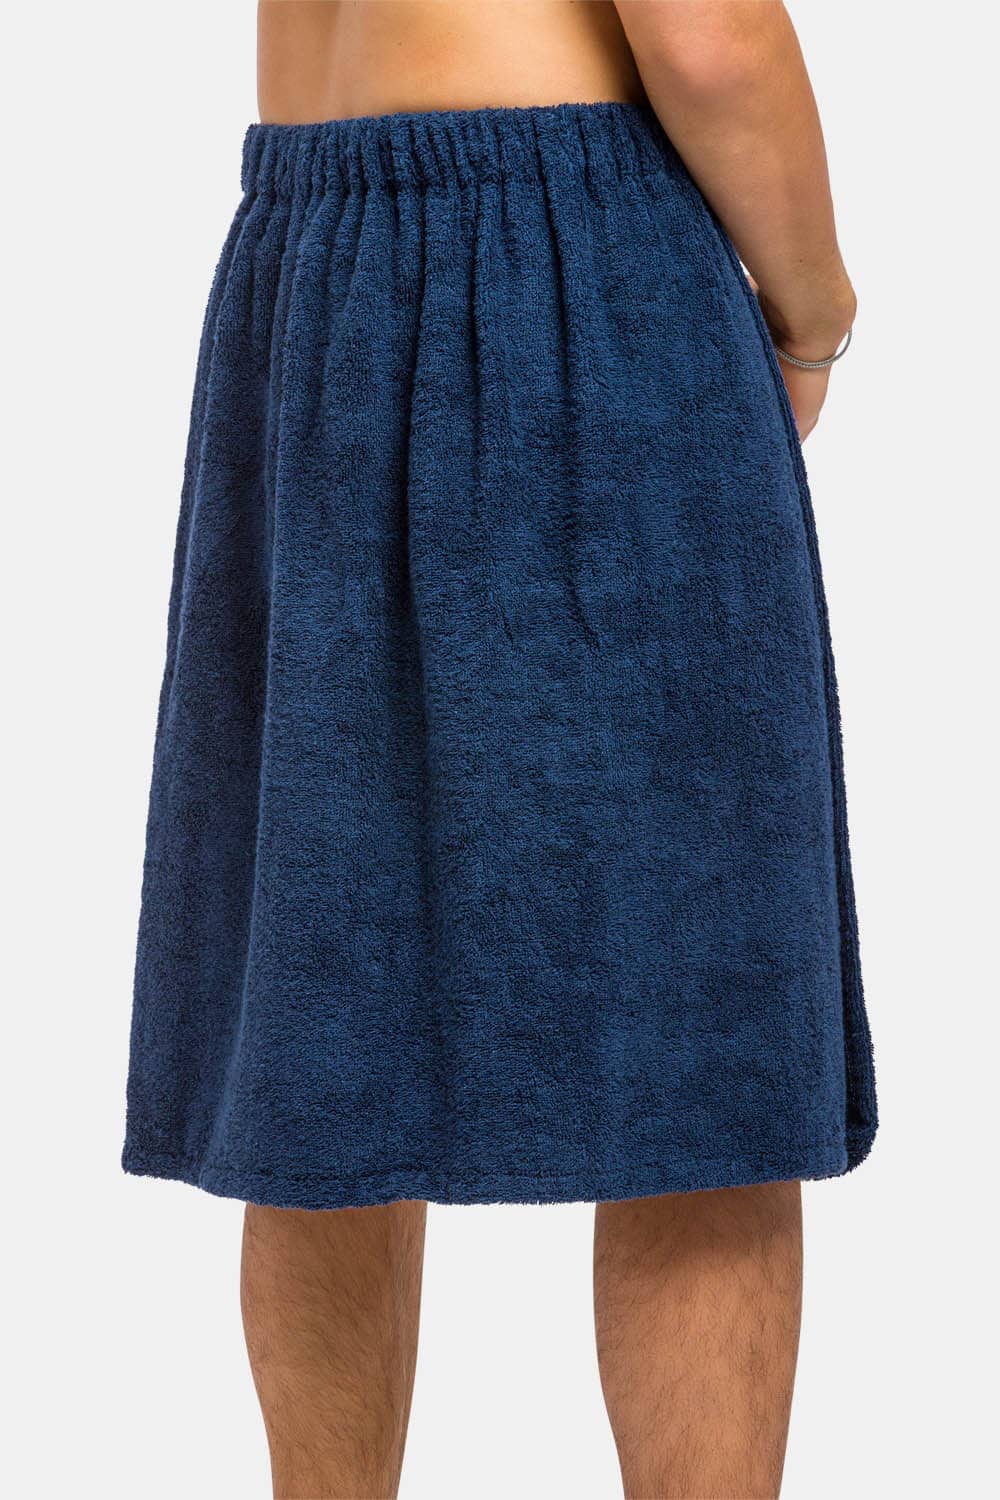 Harry Barker Terry Cloth Towel - Blue {849031010721}